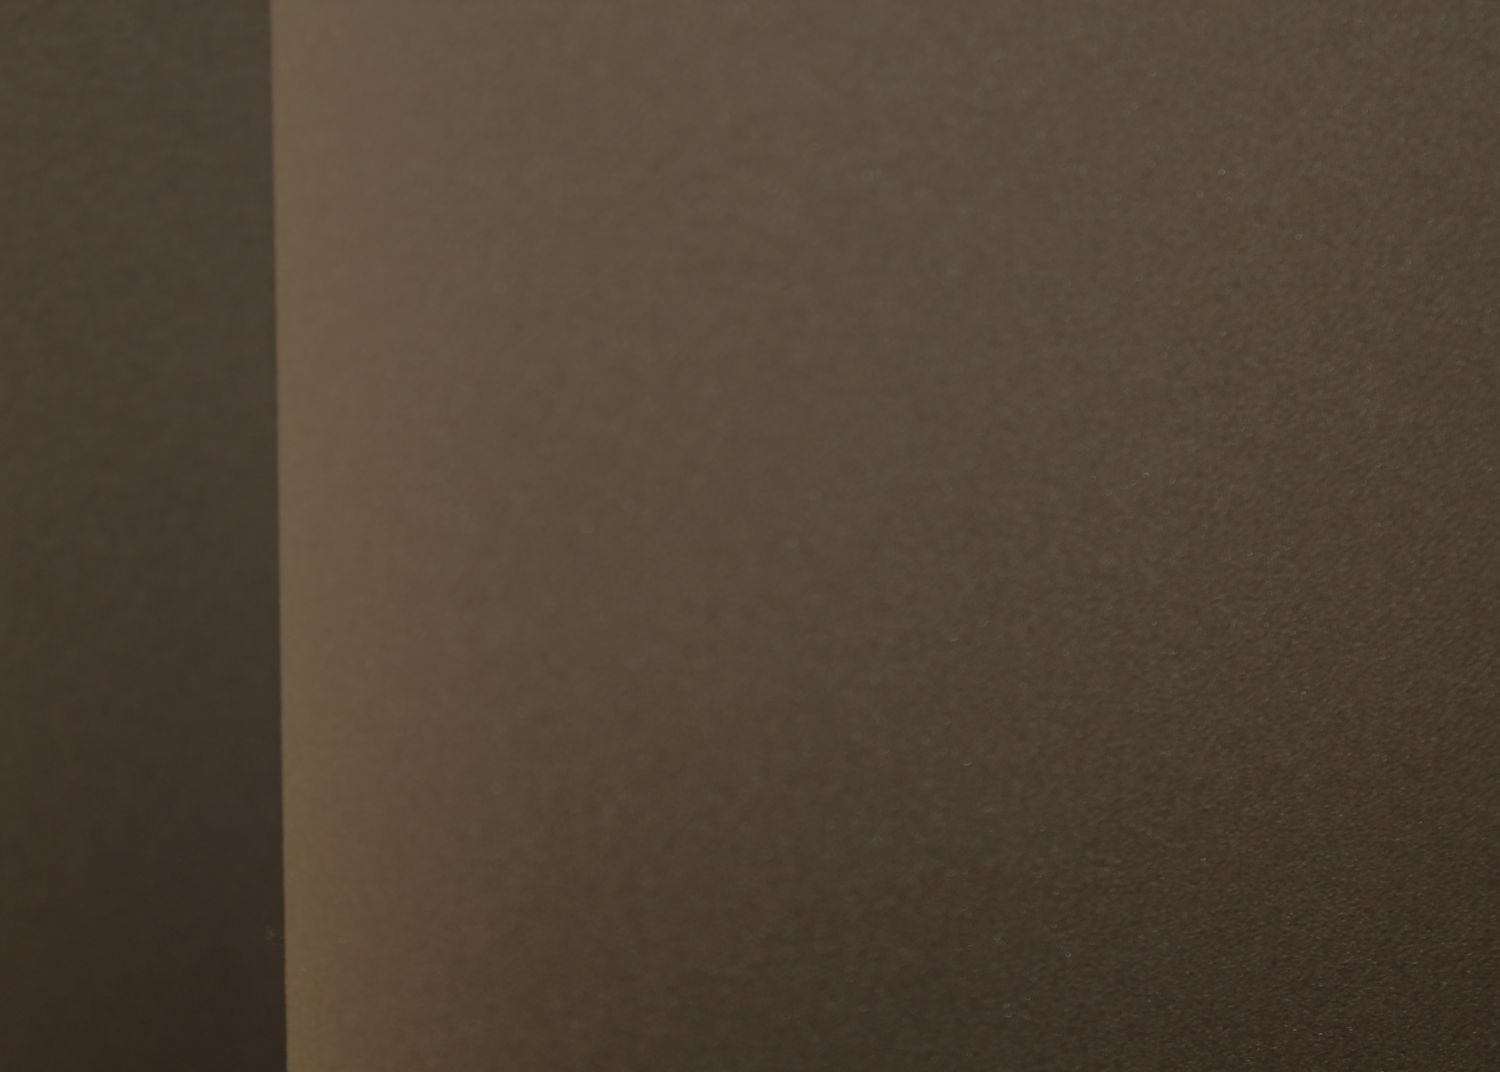 Комплект штор из ткани блэкаут "Fusion Dimout" цвет коричневый 834ш, Коричневый, Комплект коротких штор (2 шт. 1,3х1,7м.), Классические, Без ламбрекена, Короткие, 1,3 м., 1,7 м., 130, 170, 1,5 - 2,5 м., В комплекте 2 шт., Тесьма